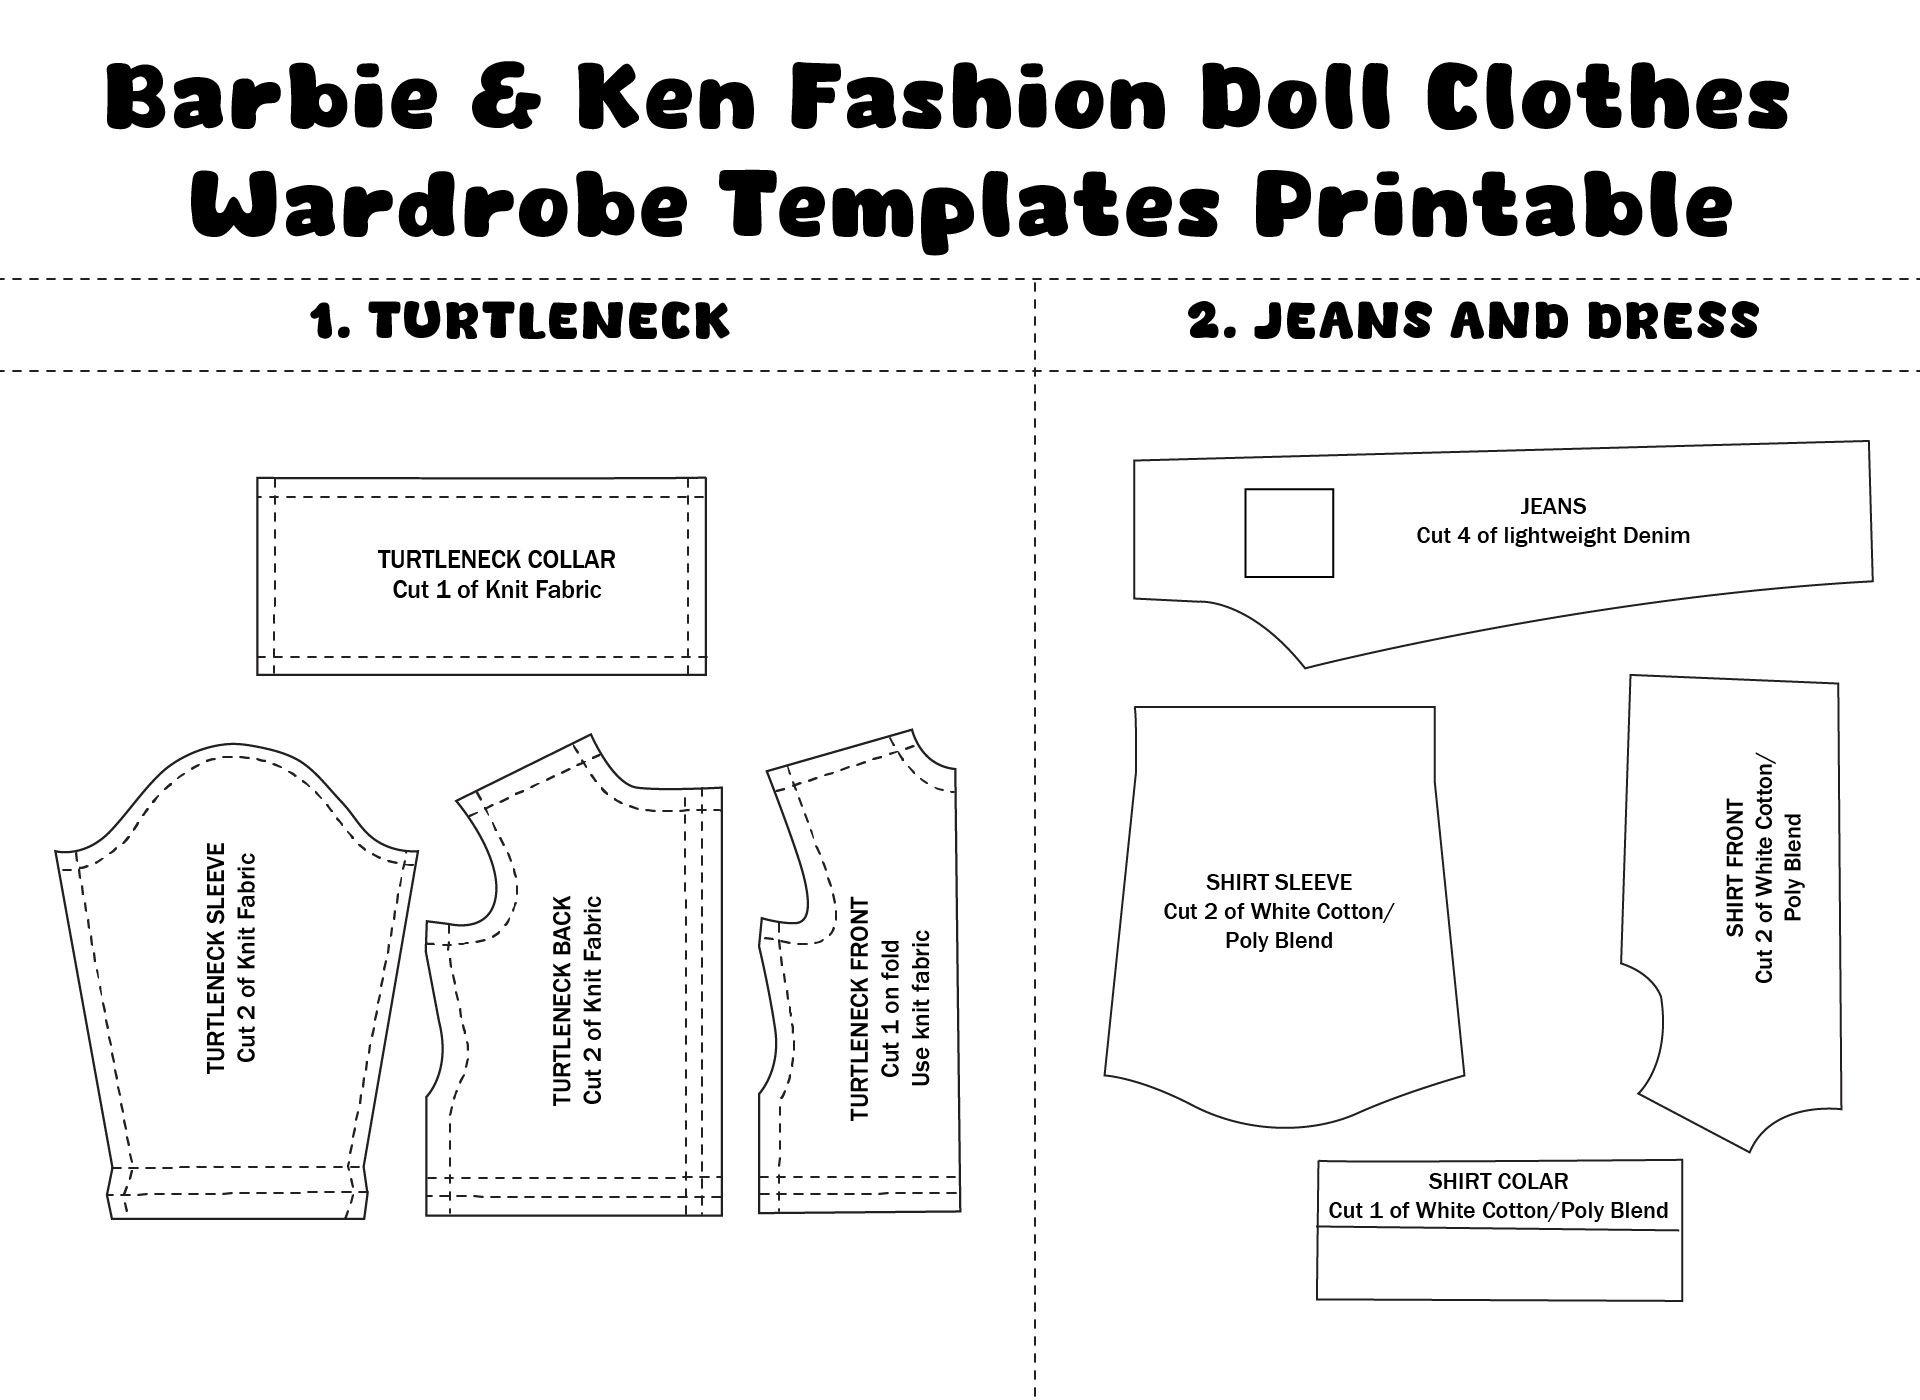 Barbie & Ken Fashion Doll Clothes Wardrobe Templates Printable